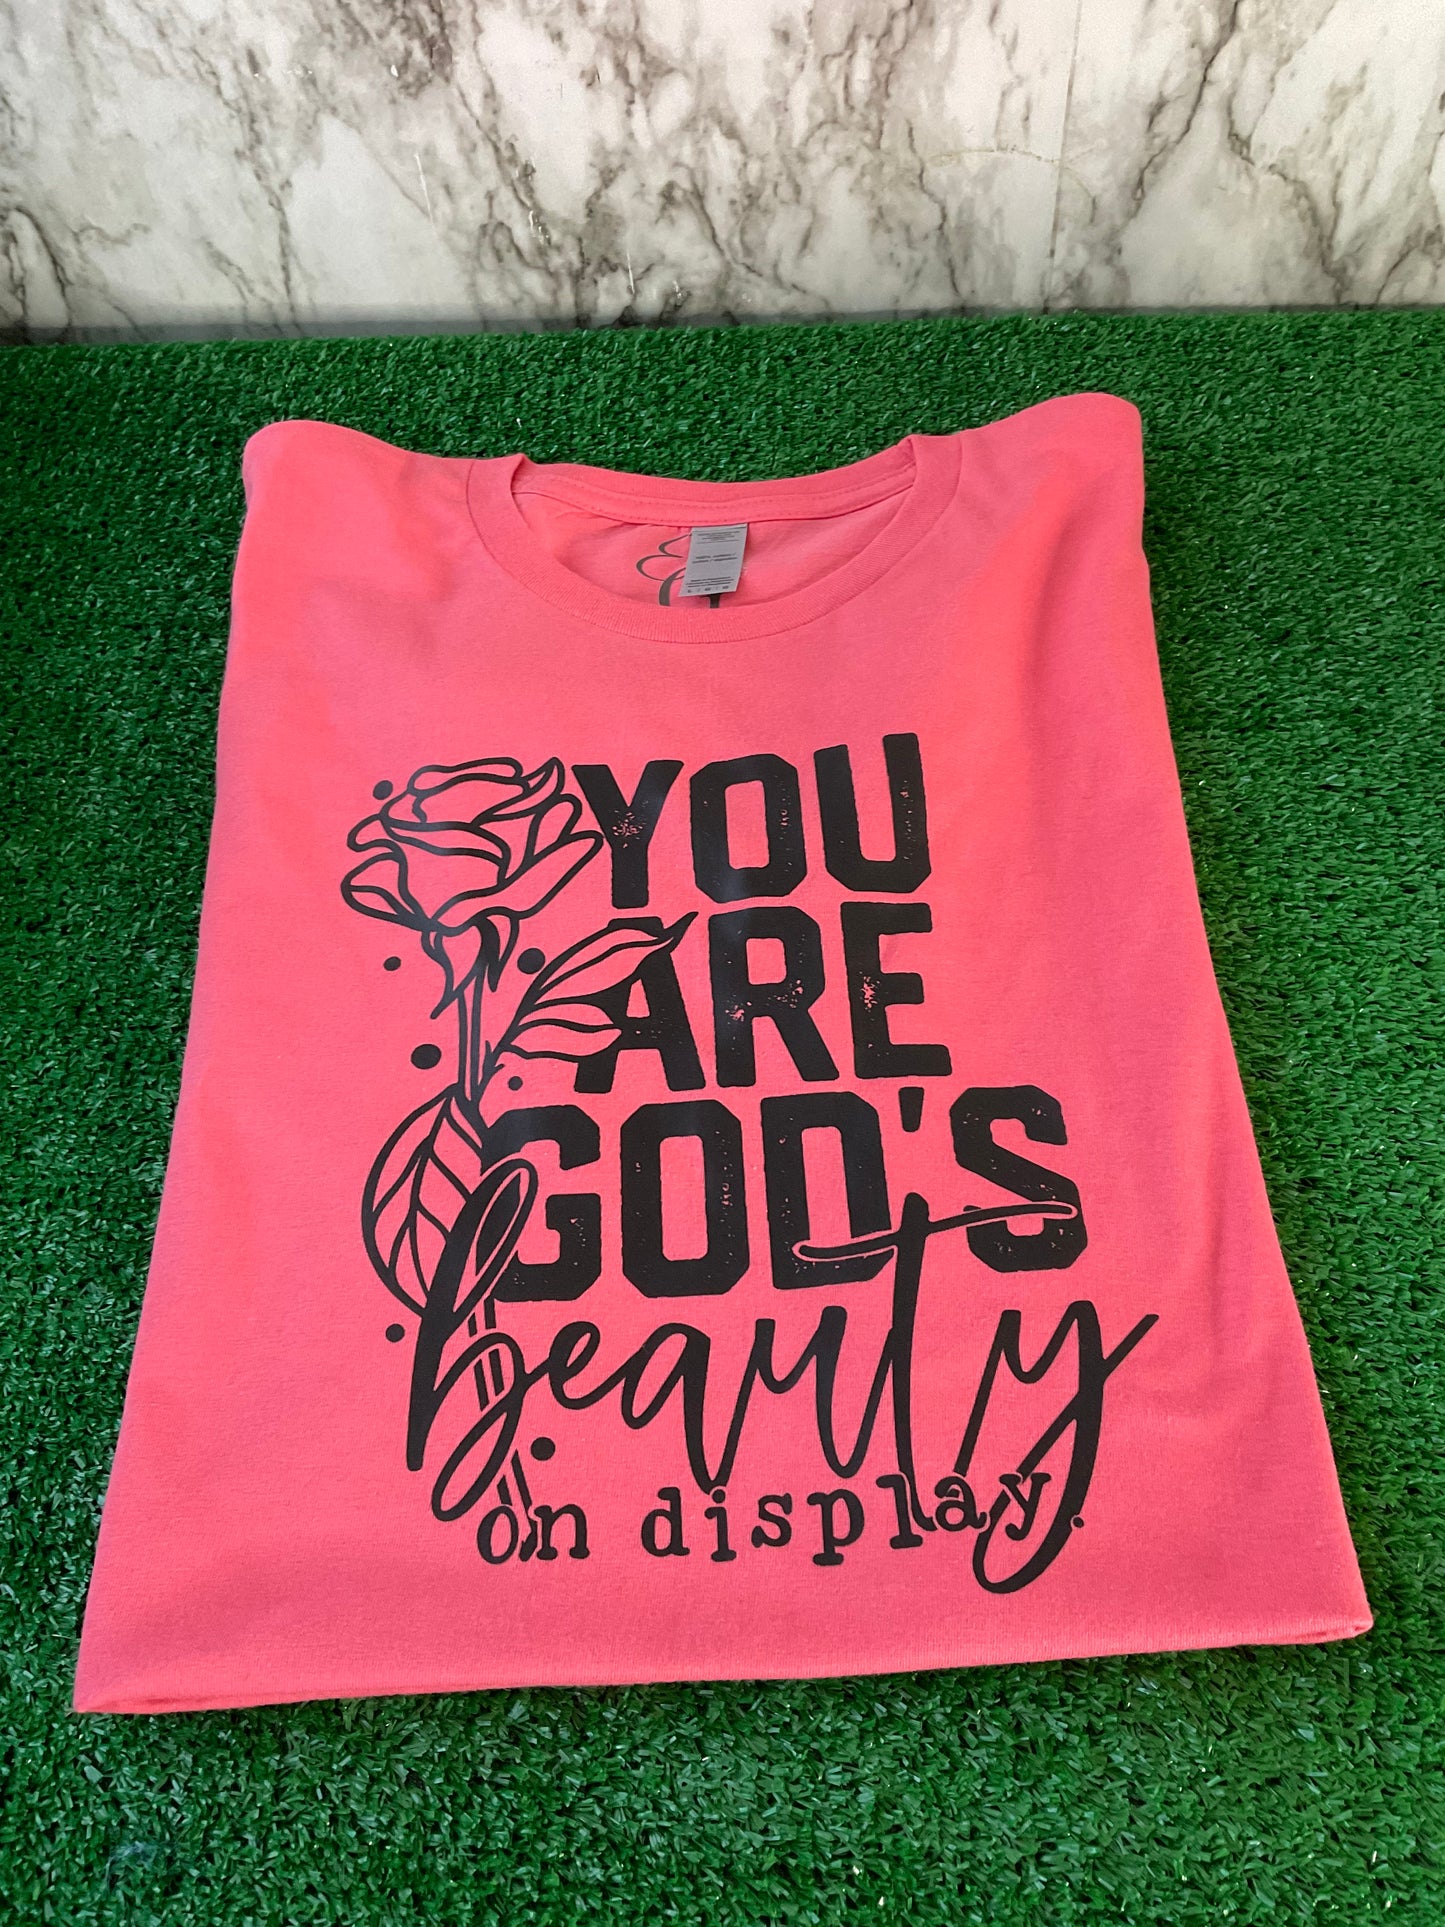 God's Beauty on Display T-shirt